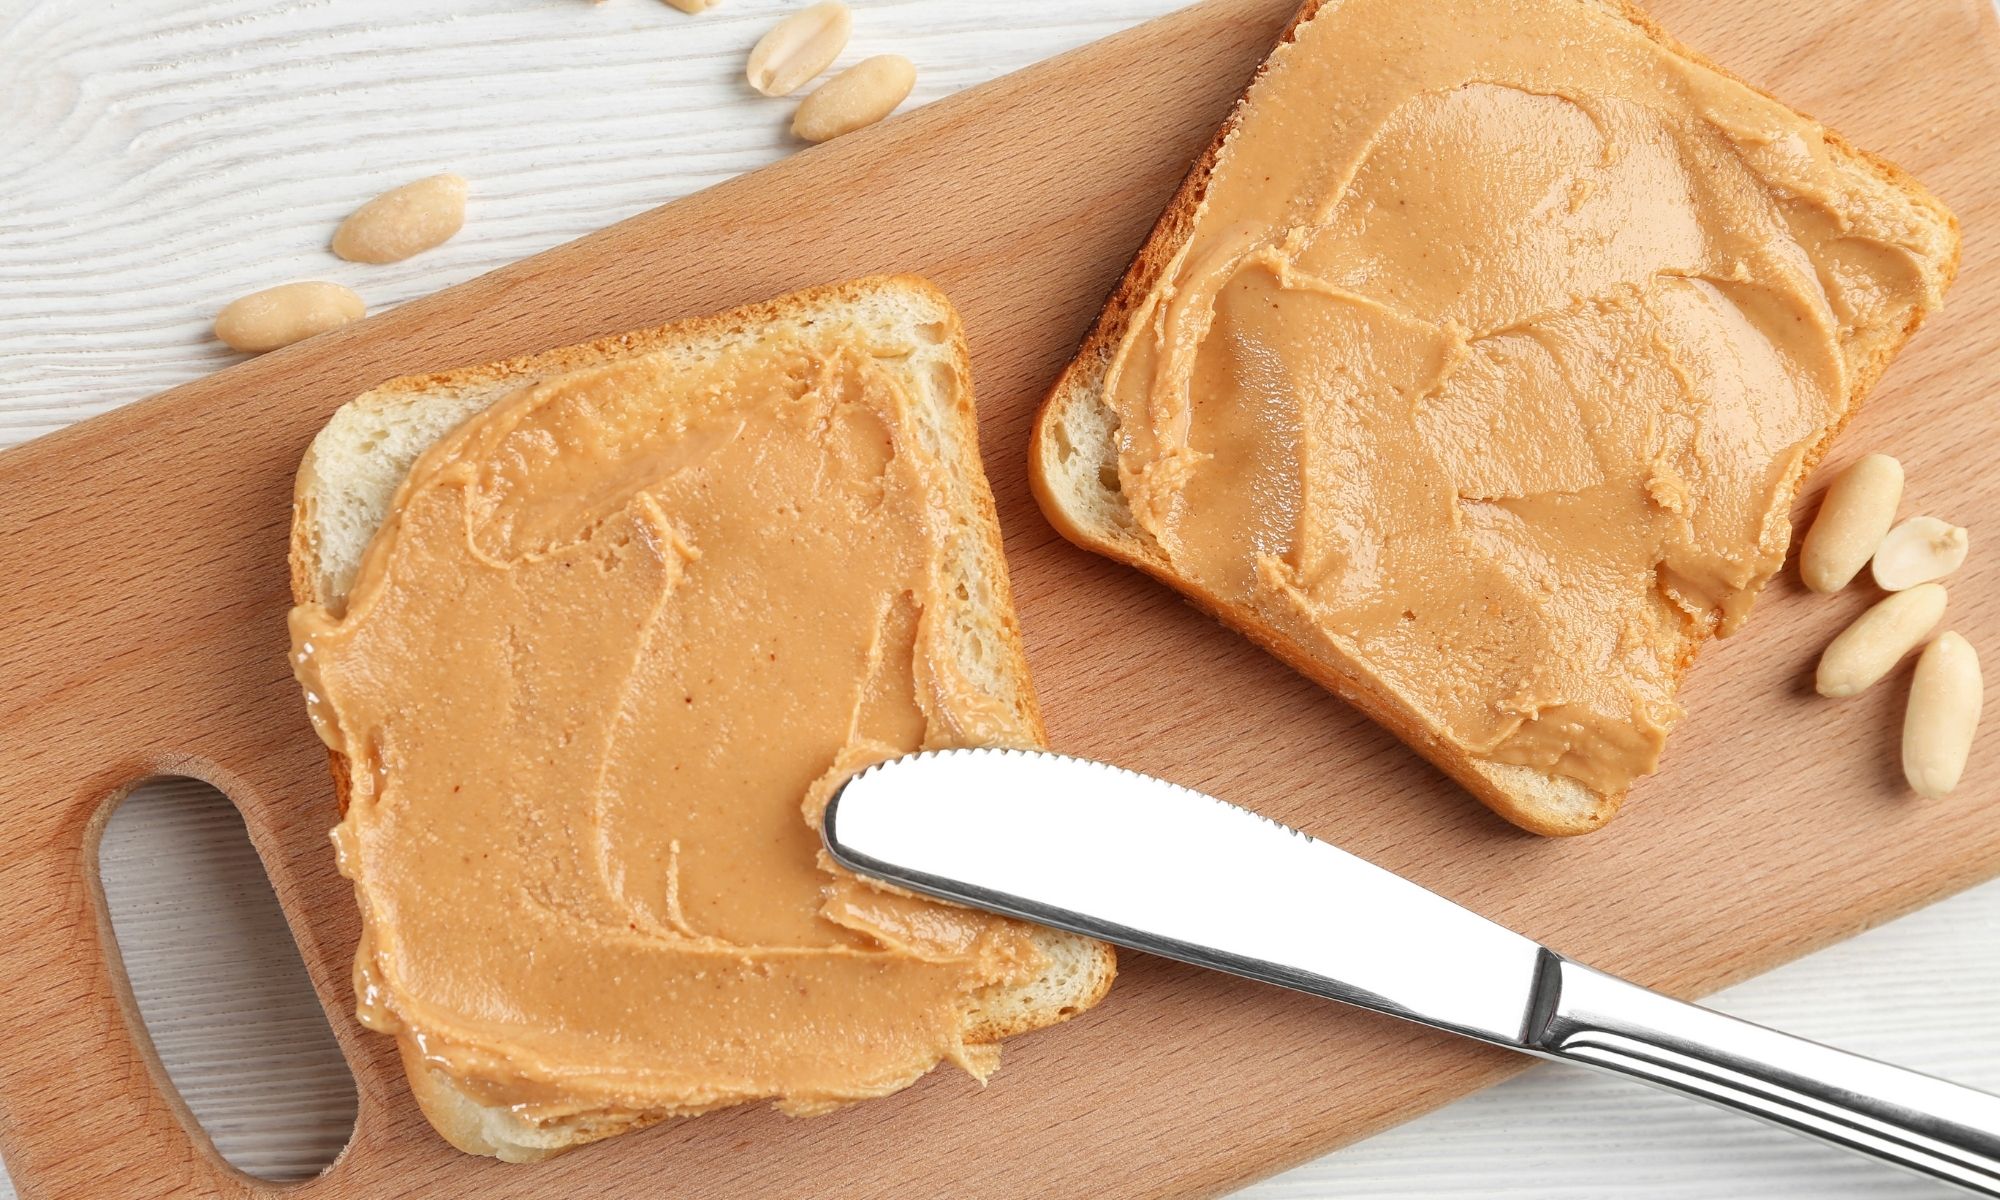 peanut butter as a healthy snack alternative